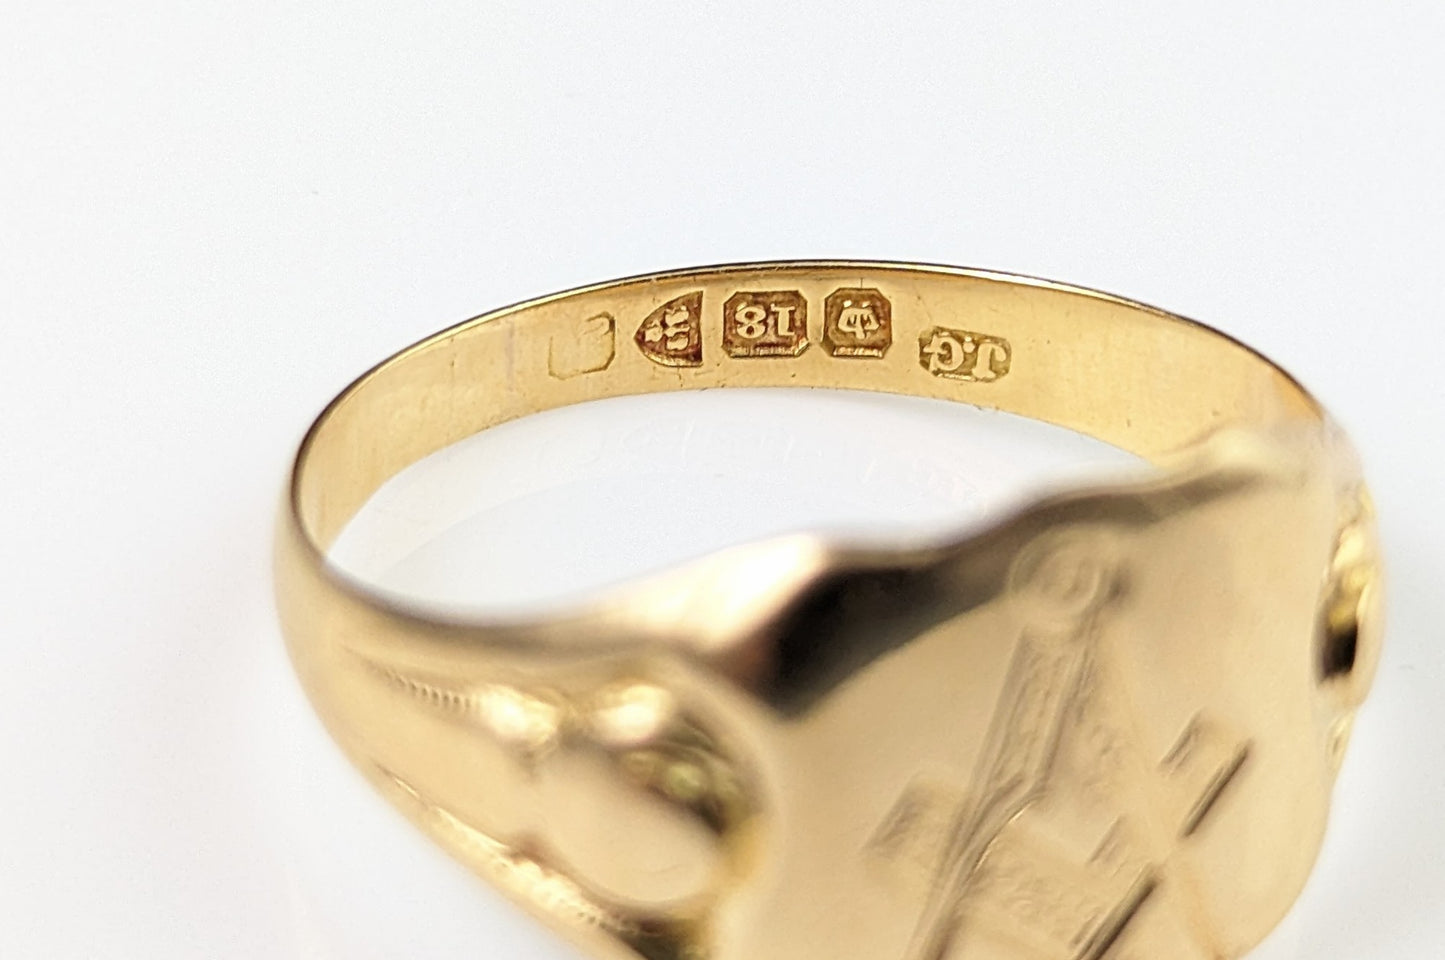 Antique 18ct gold signet ring, Masonic, shield shaped